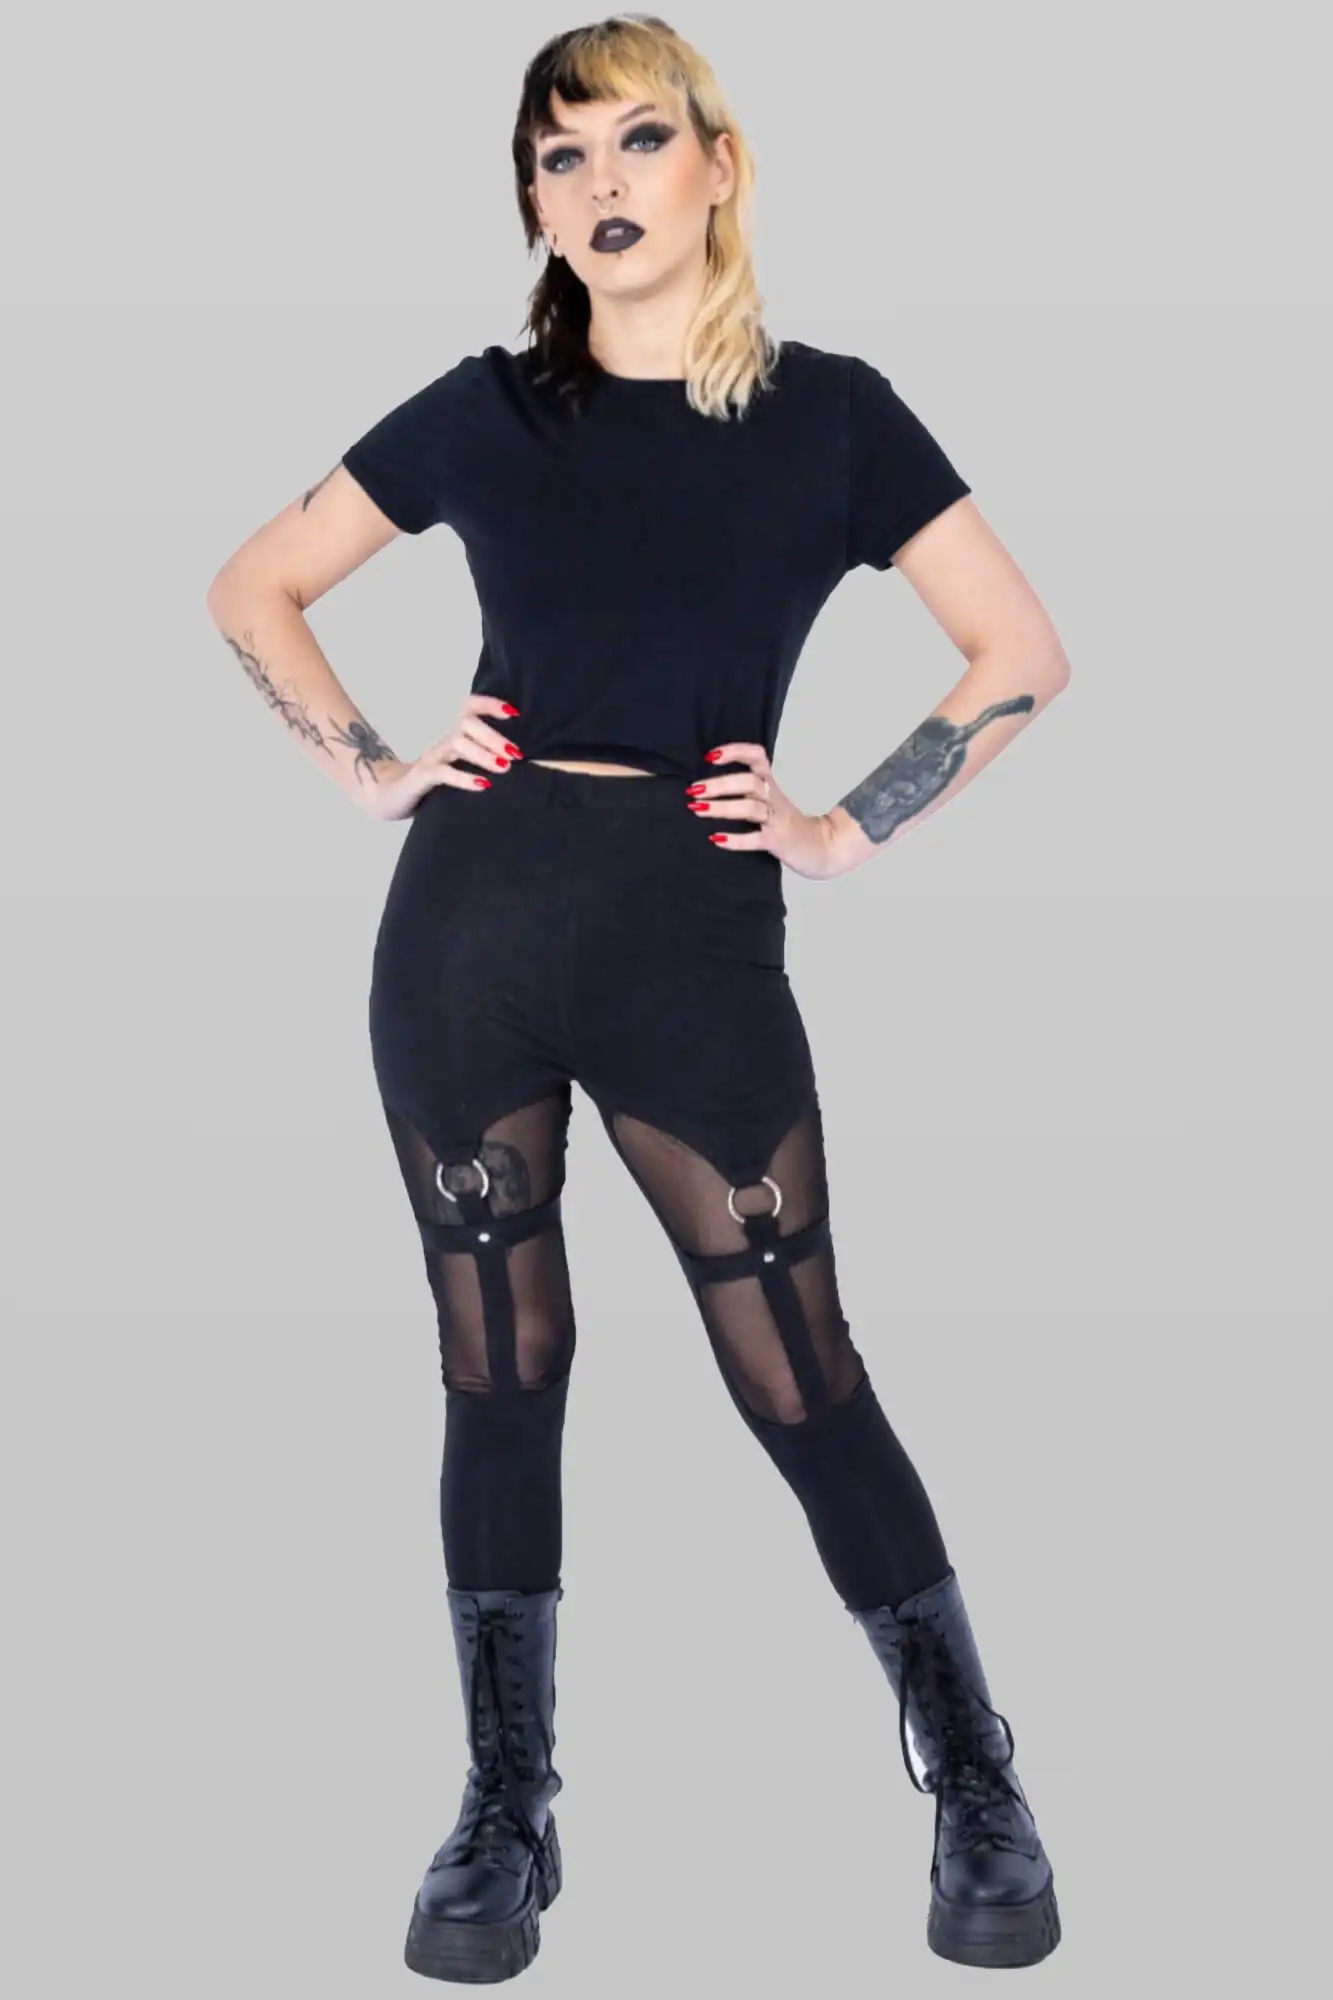 Best Alternative & Gothic Leggings  Jawbreaker, Banned - Dark Fashion  Clothing